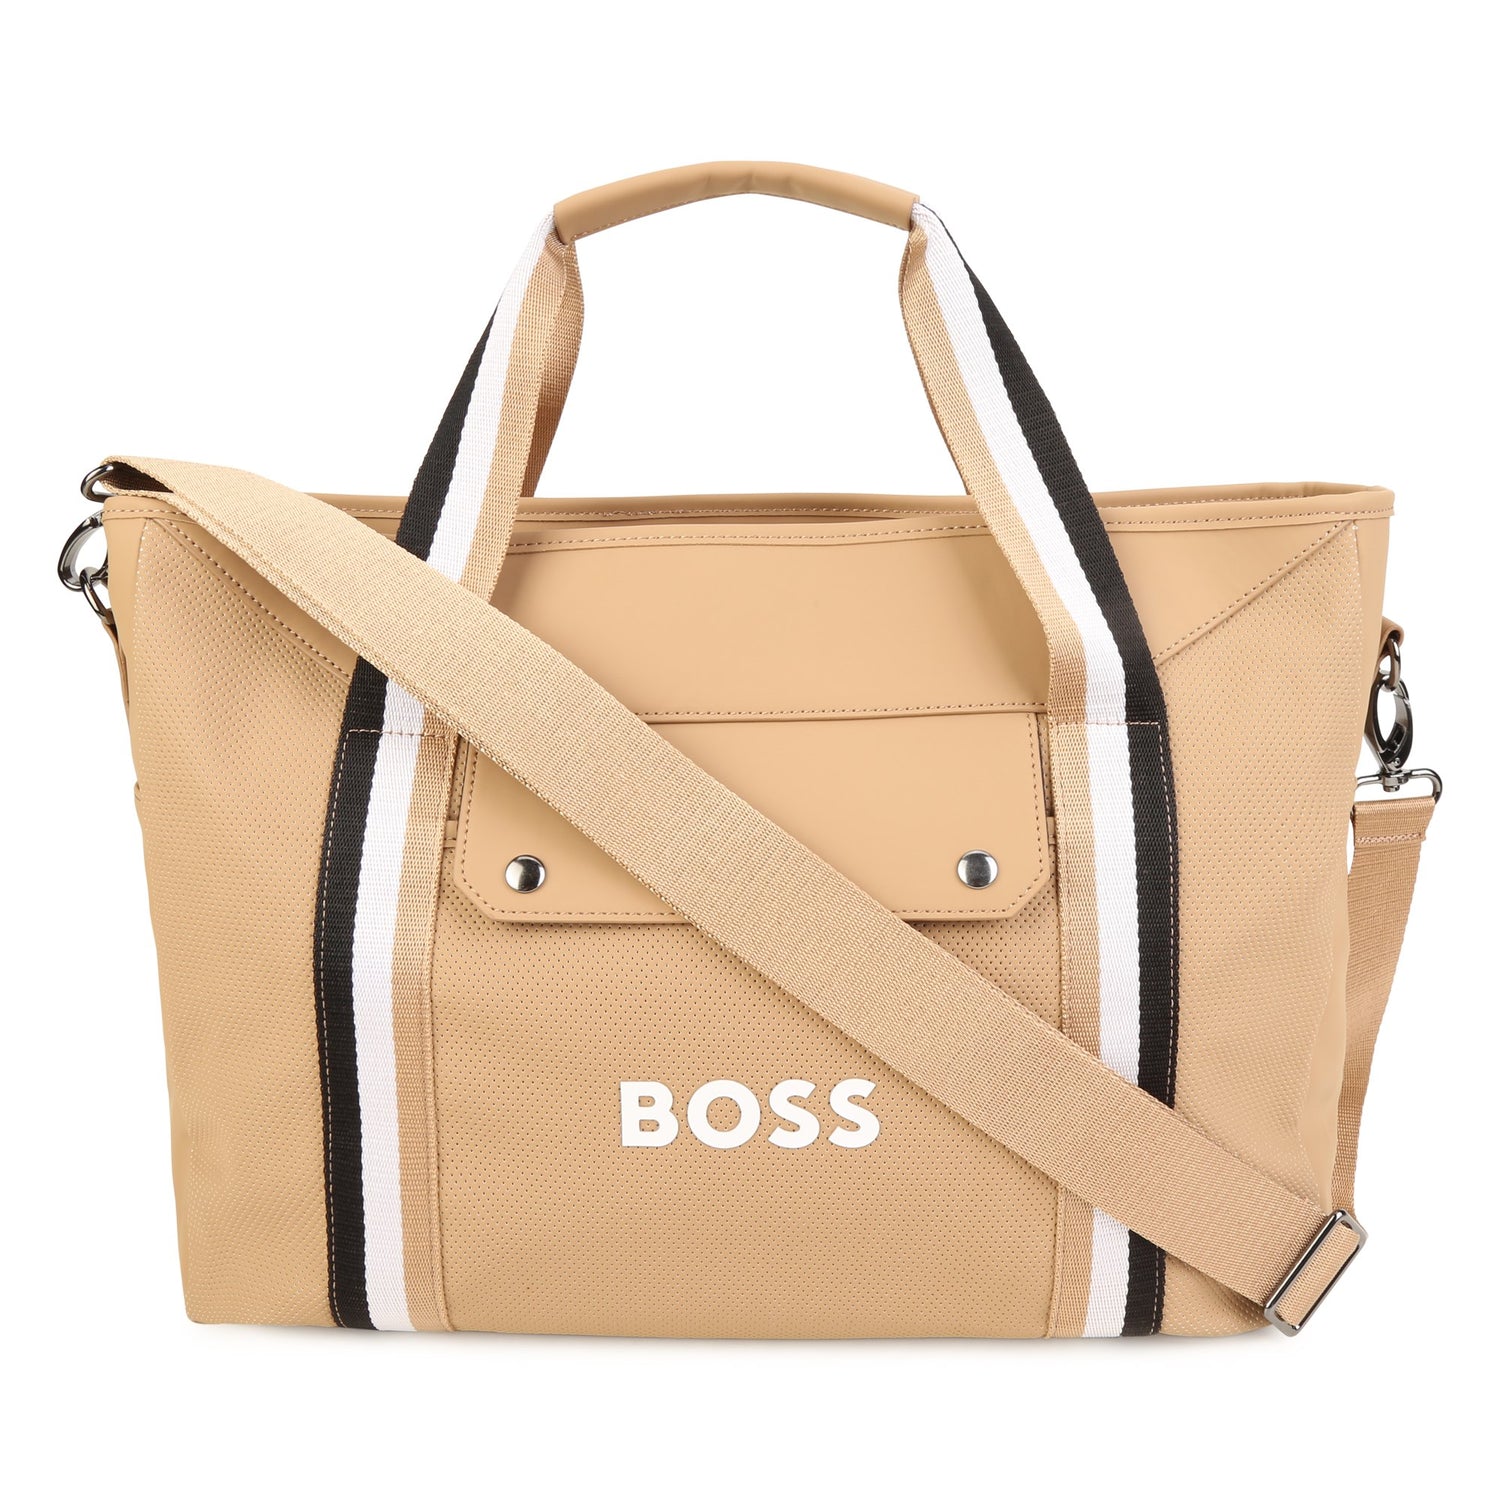 Hugo Boss Changing Bag Style: J90336